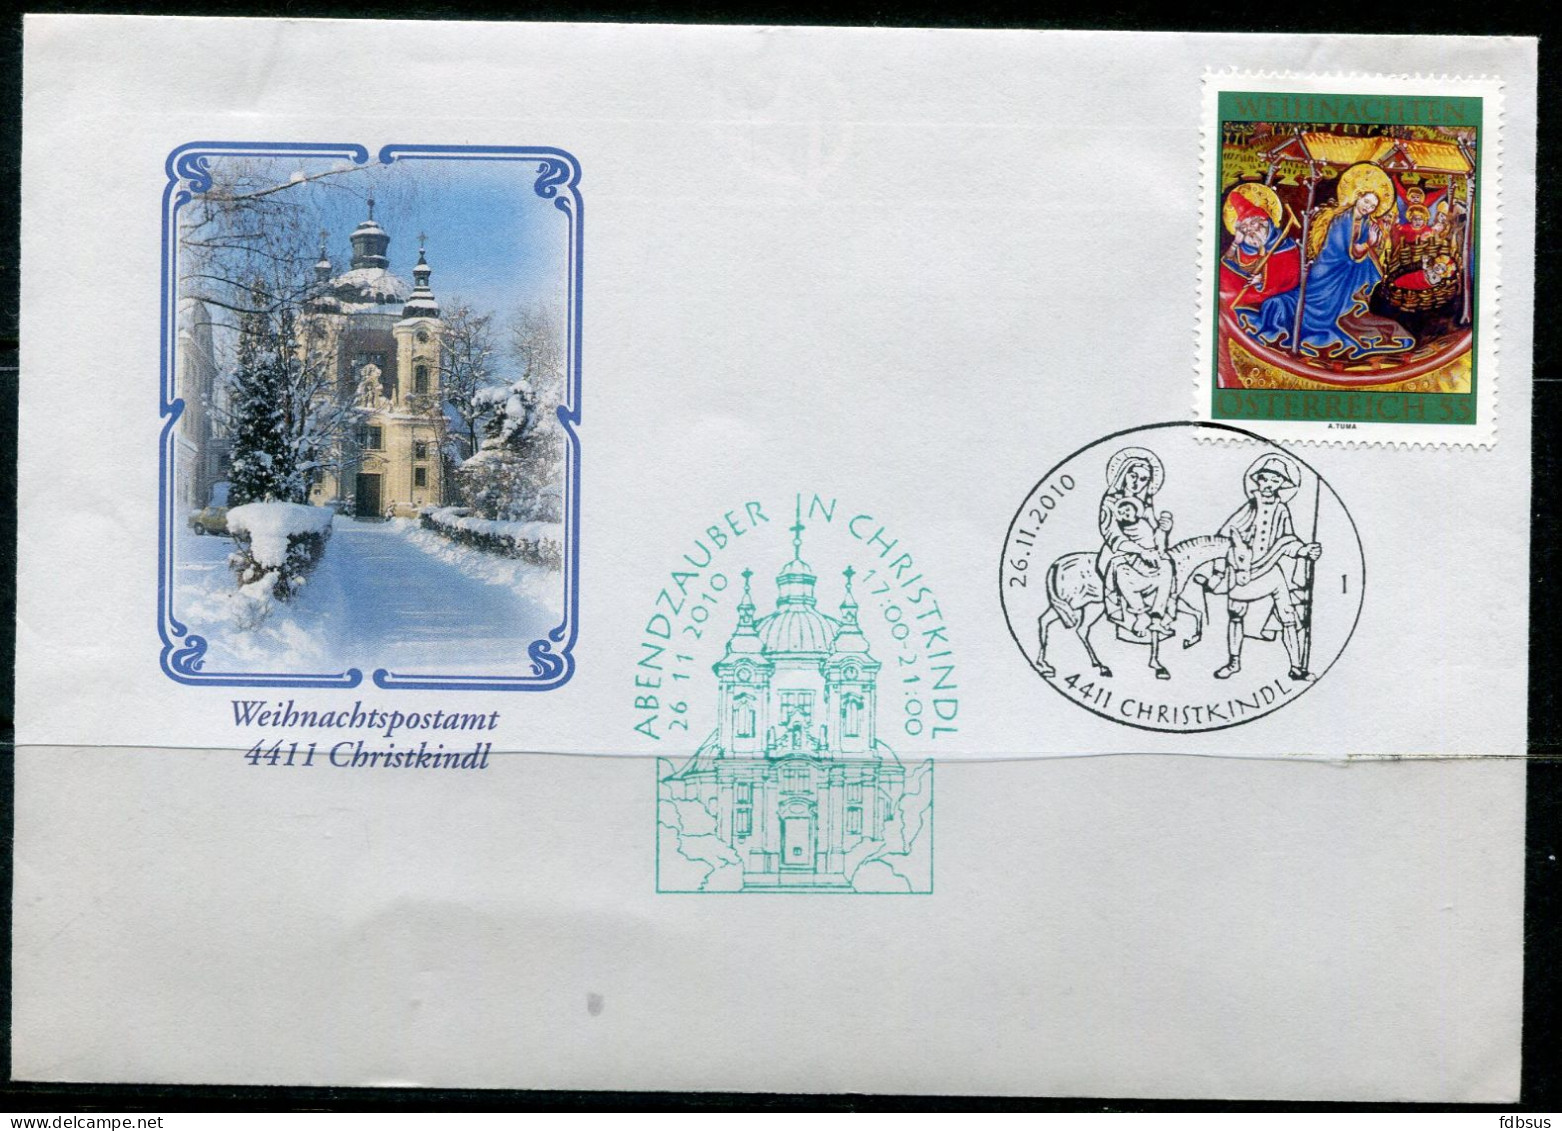 26-11-2010 Christkindl Cover Noel Christmas Navidad Weihnachten - See Sonderstempel And Briefmarken - - Lettres & Documents